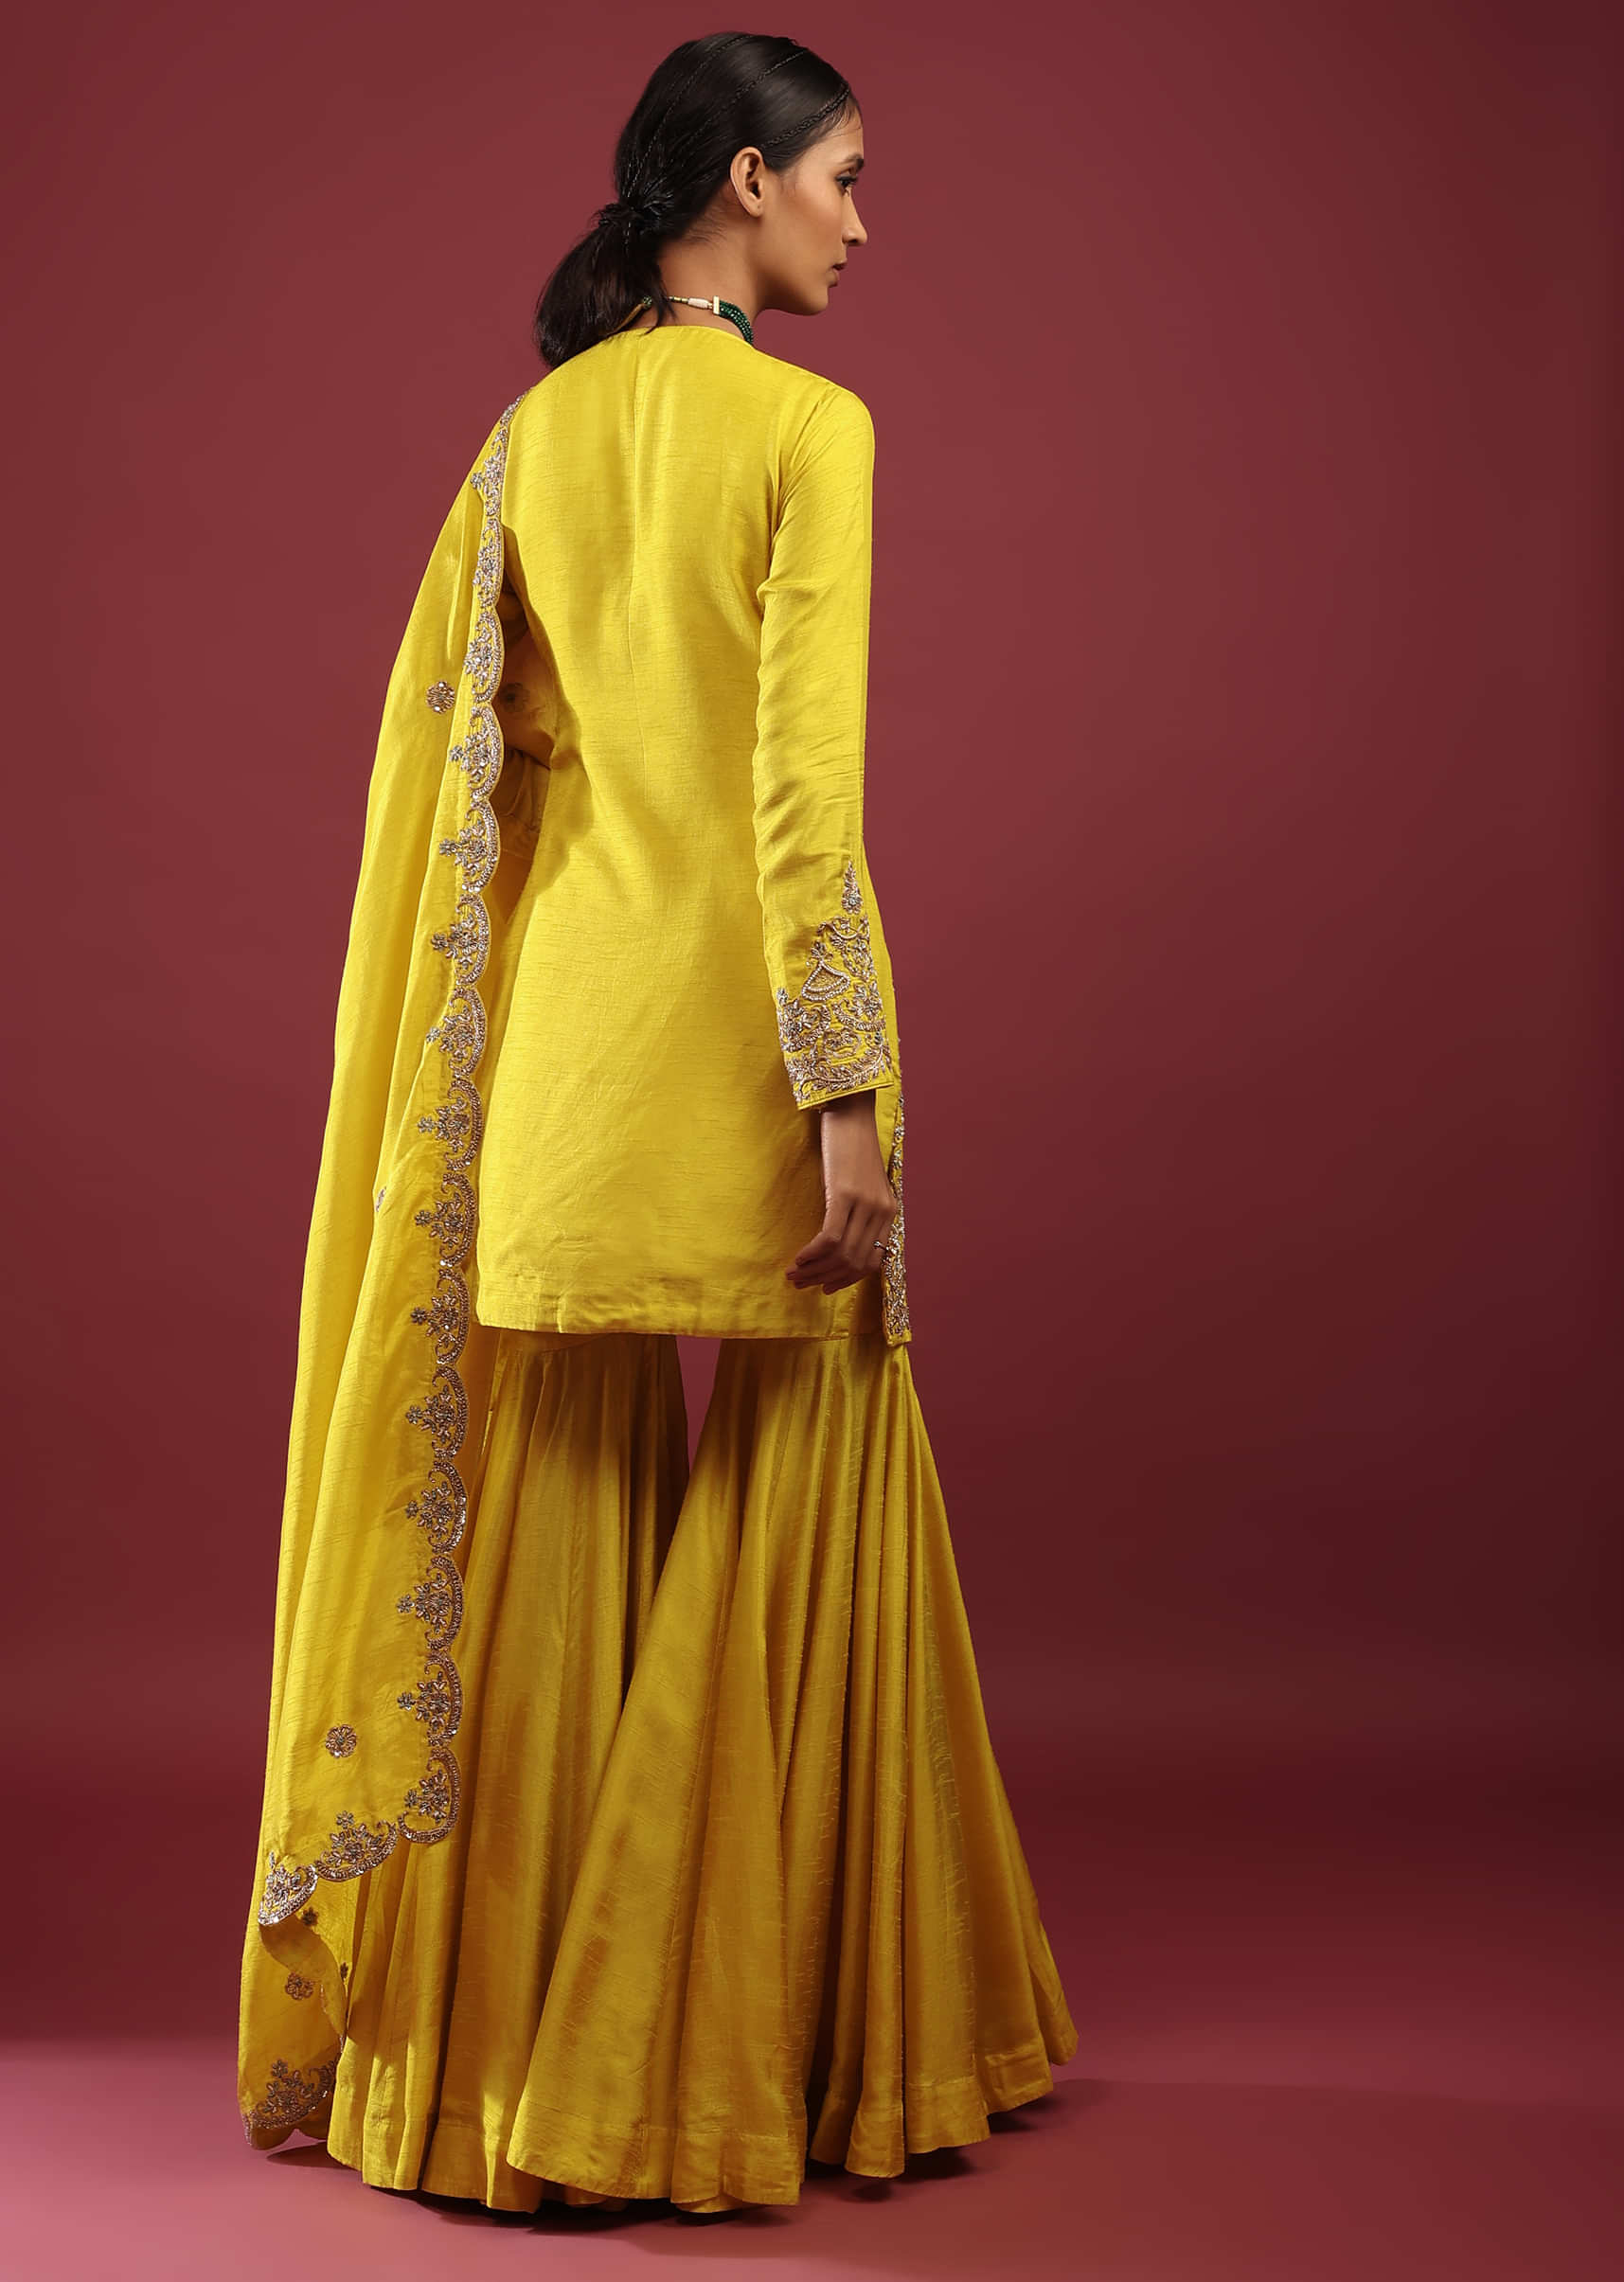 Daffodil Yellow Sharara Suit In Raw Silk With Zardosi And Moti Floral Work